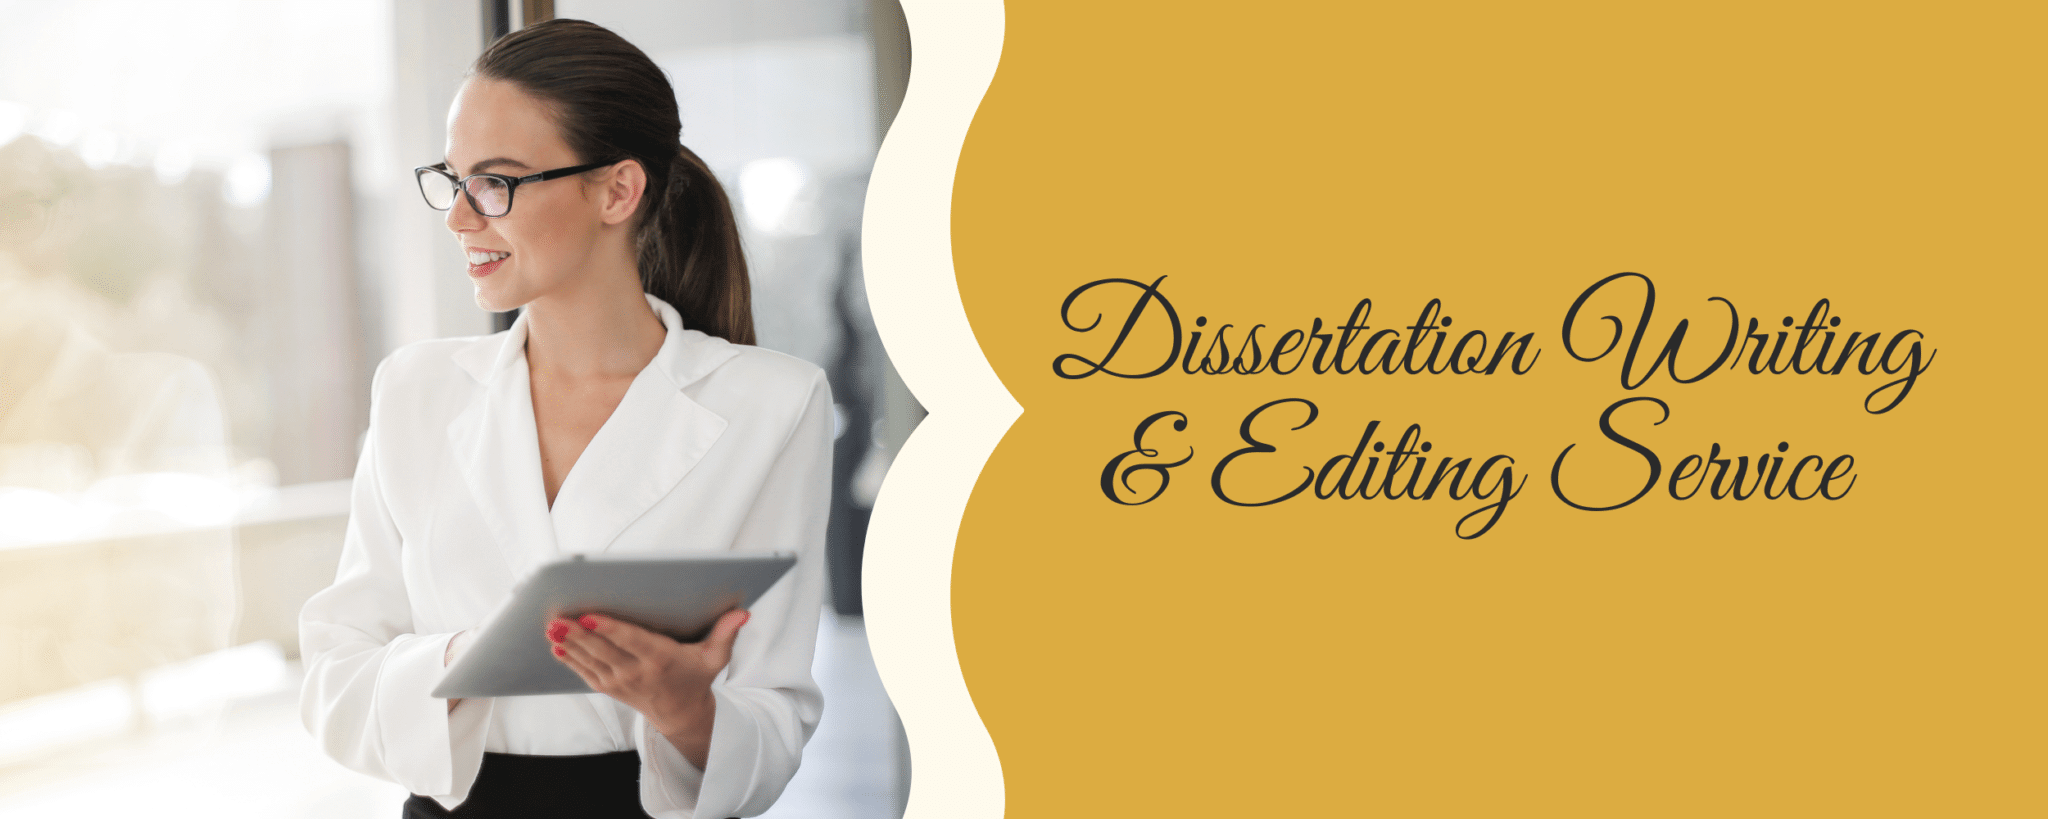 online dissertation editing service